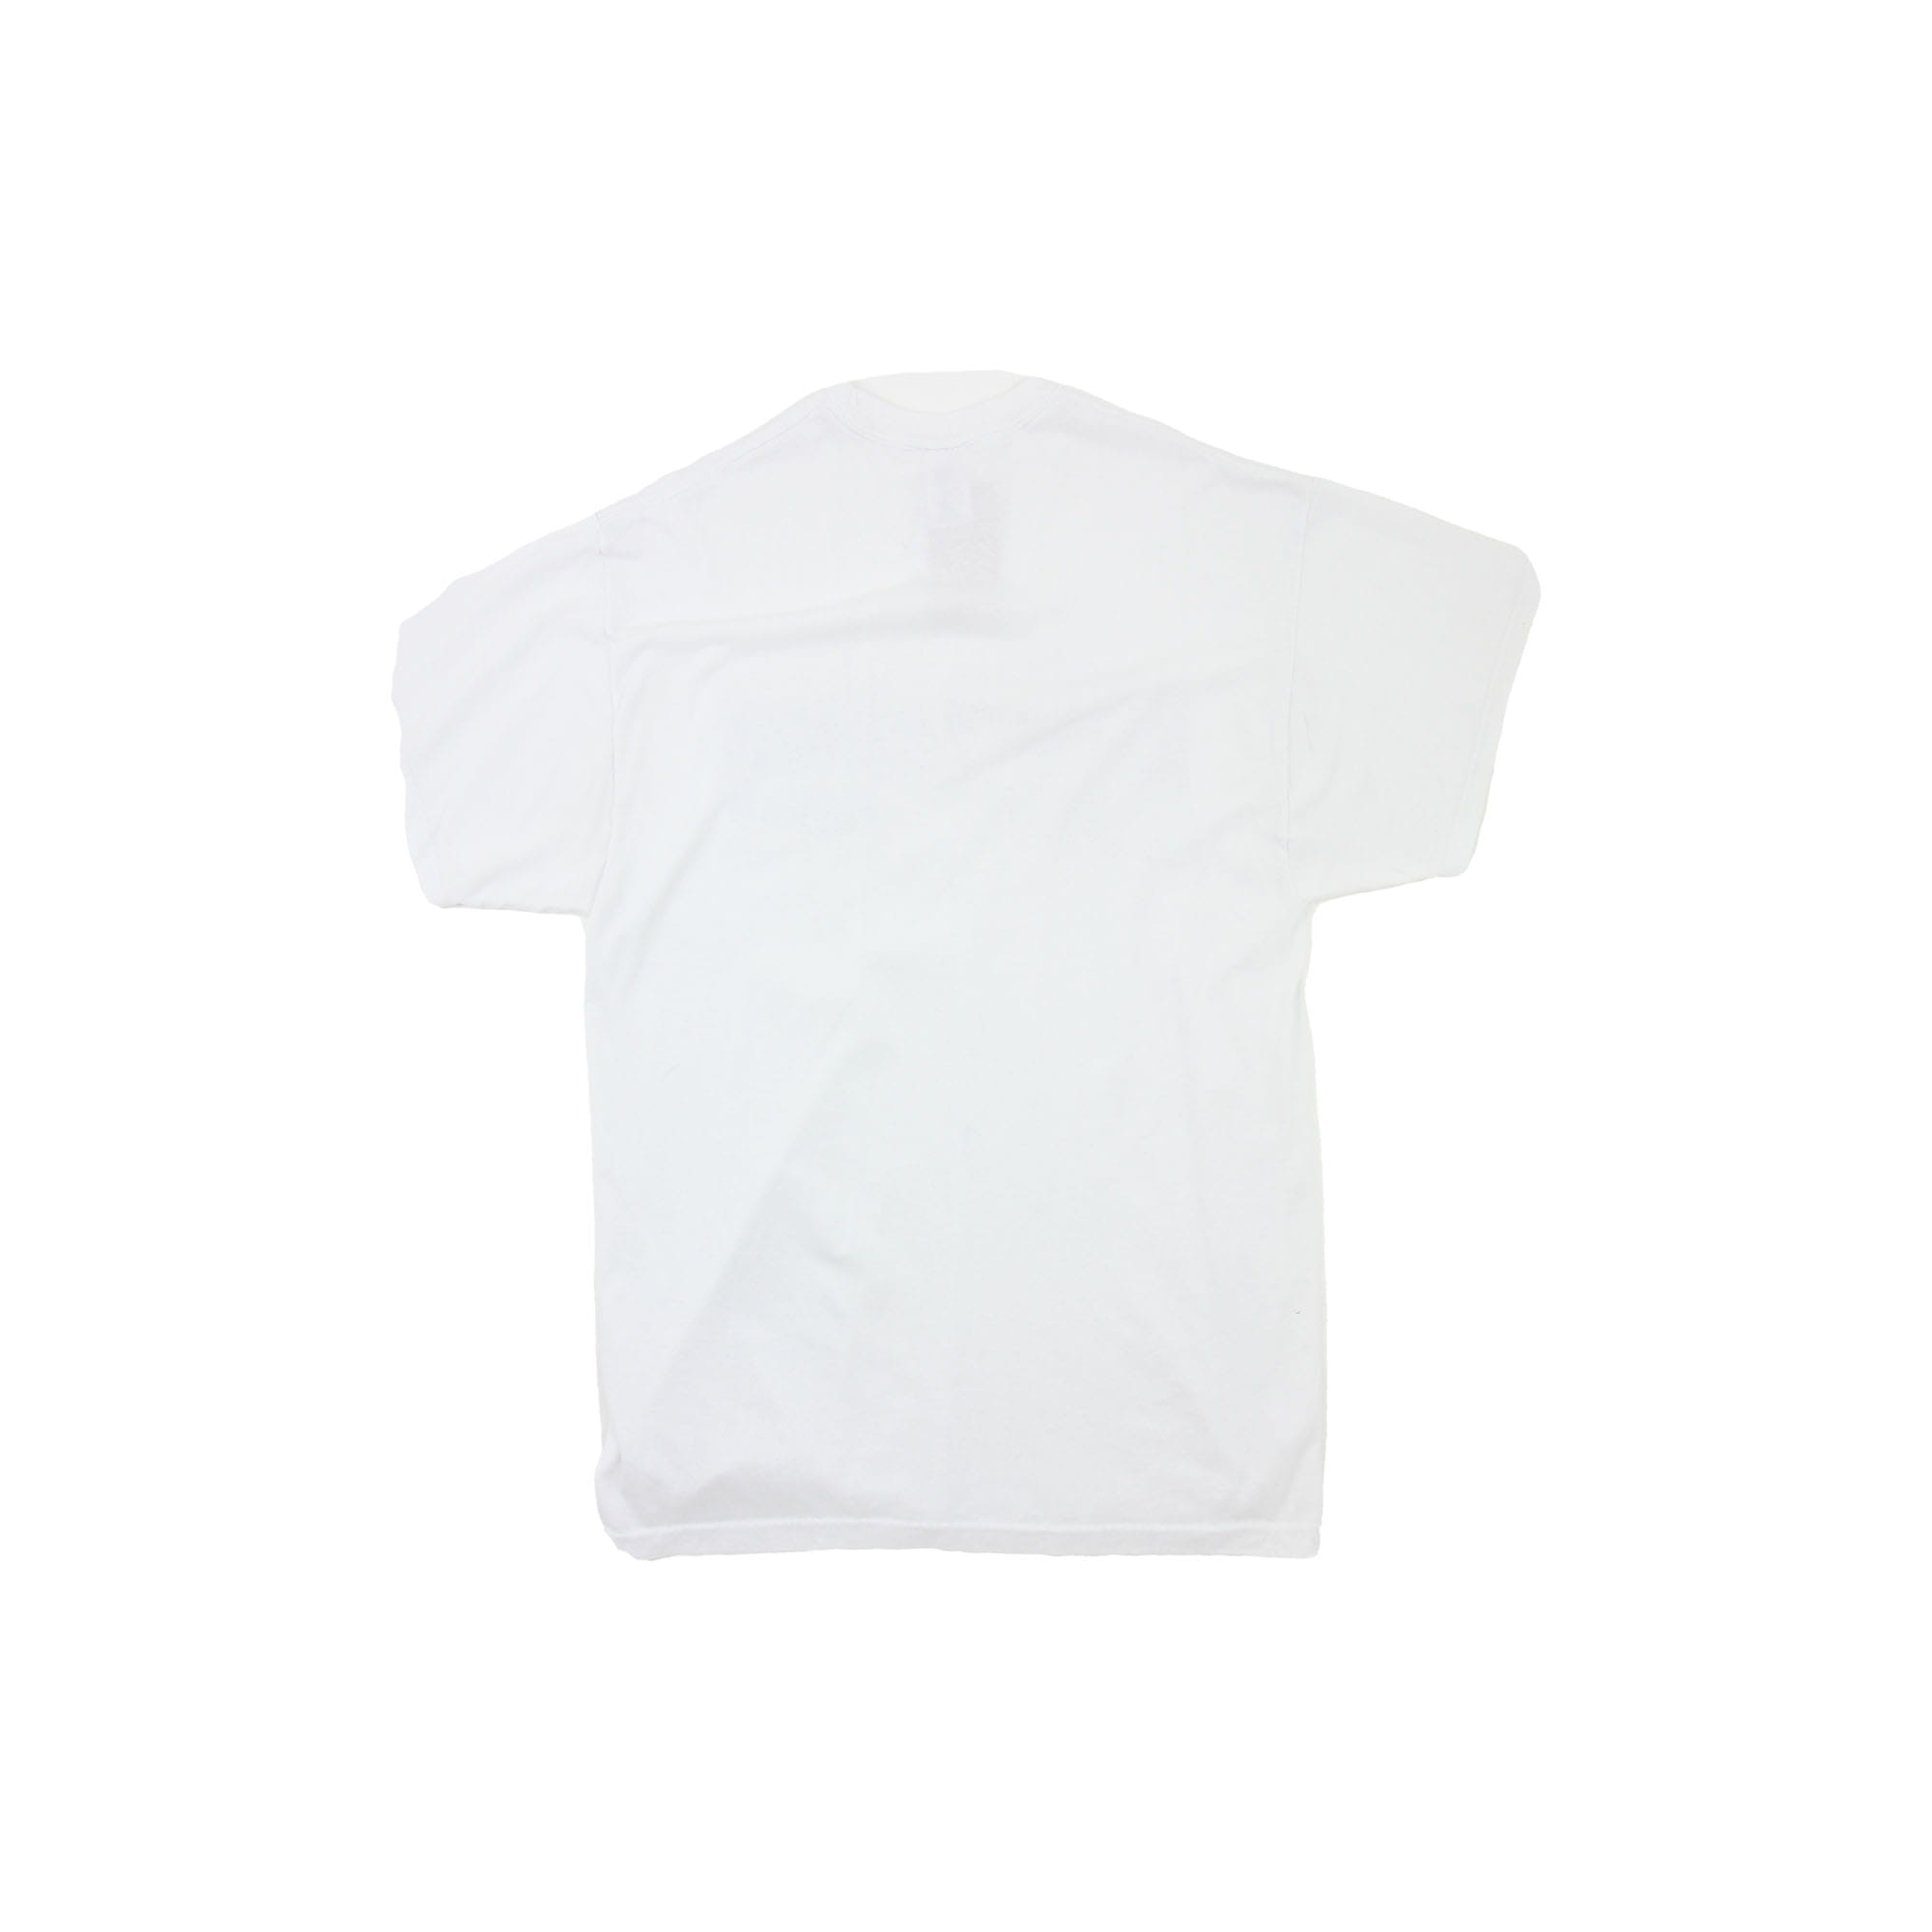 Hard Rock New York T-Shirt White -  S